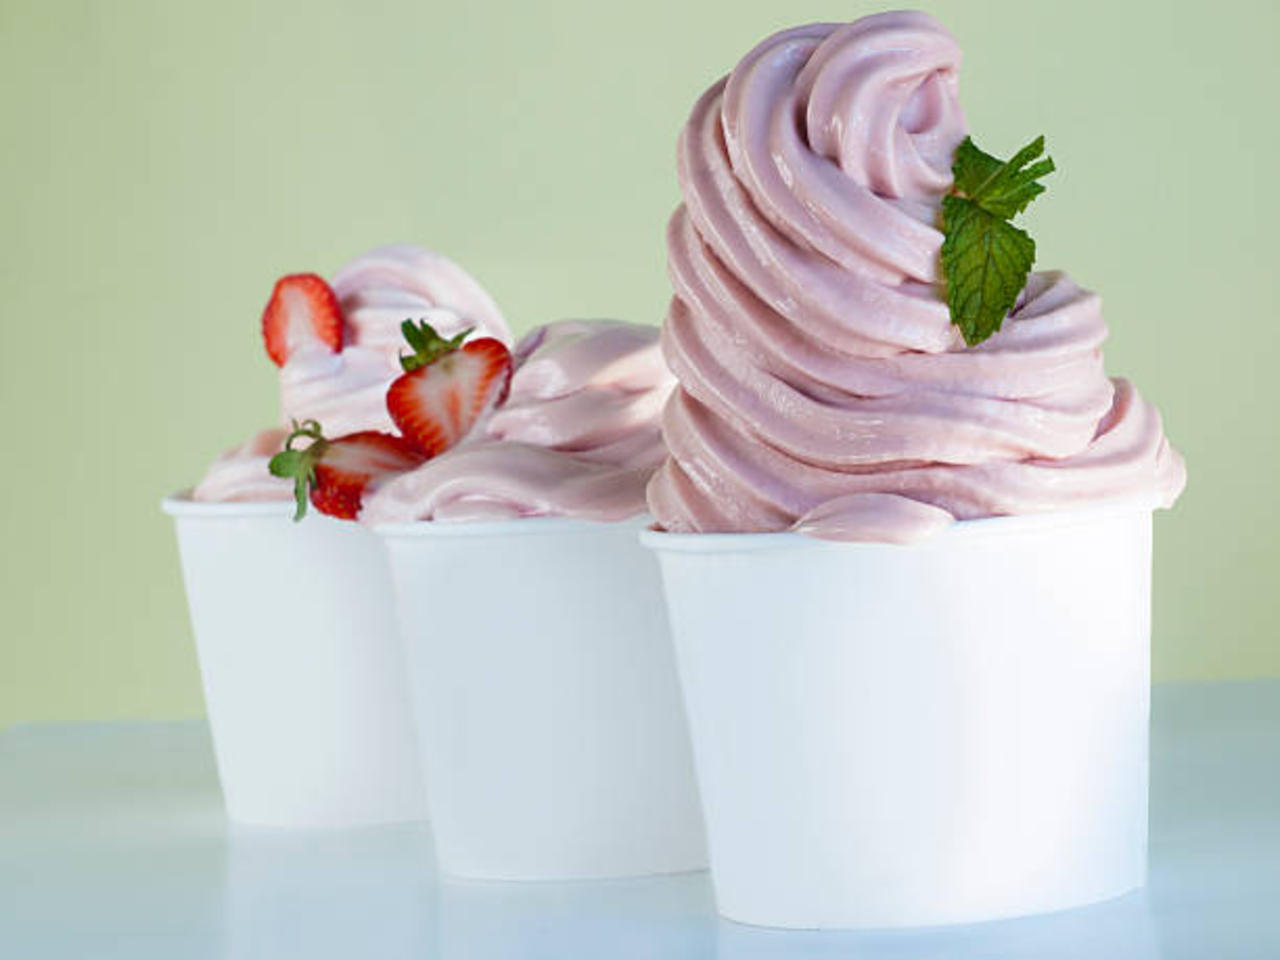 5 Fun Facts About Frozen Yogurt (National Frozen Yogurt Day, February 6th)